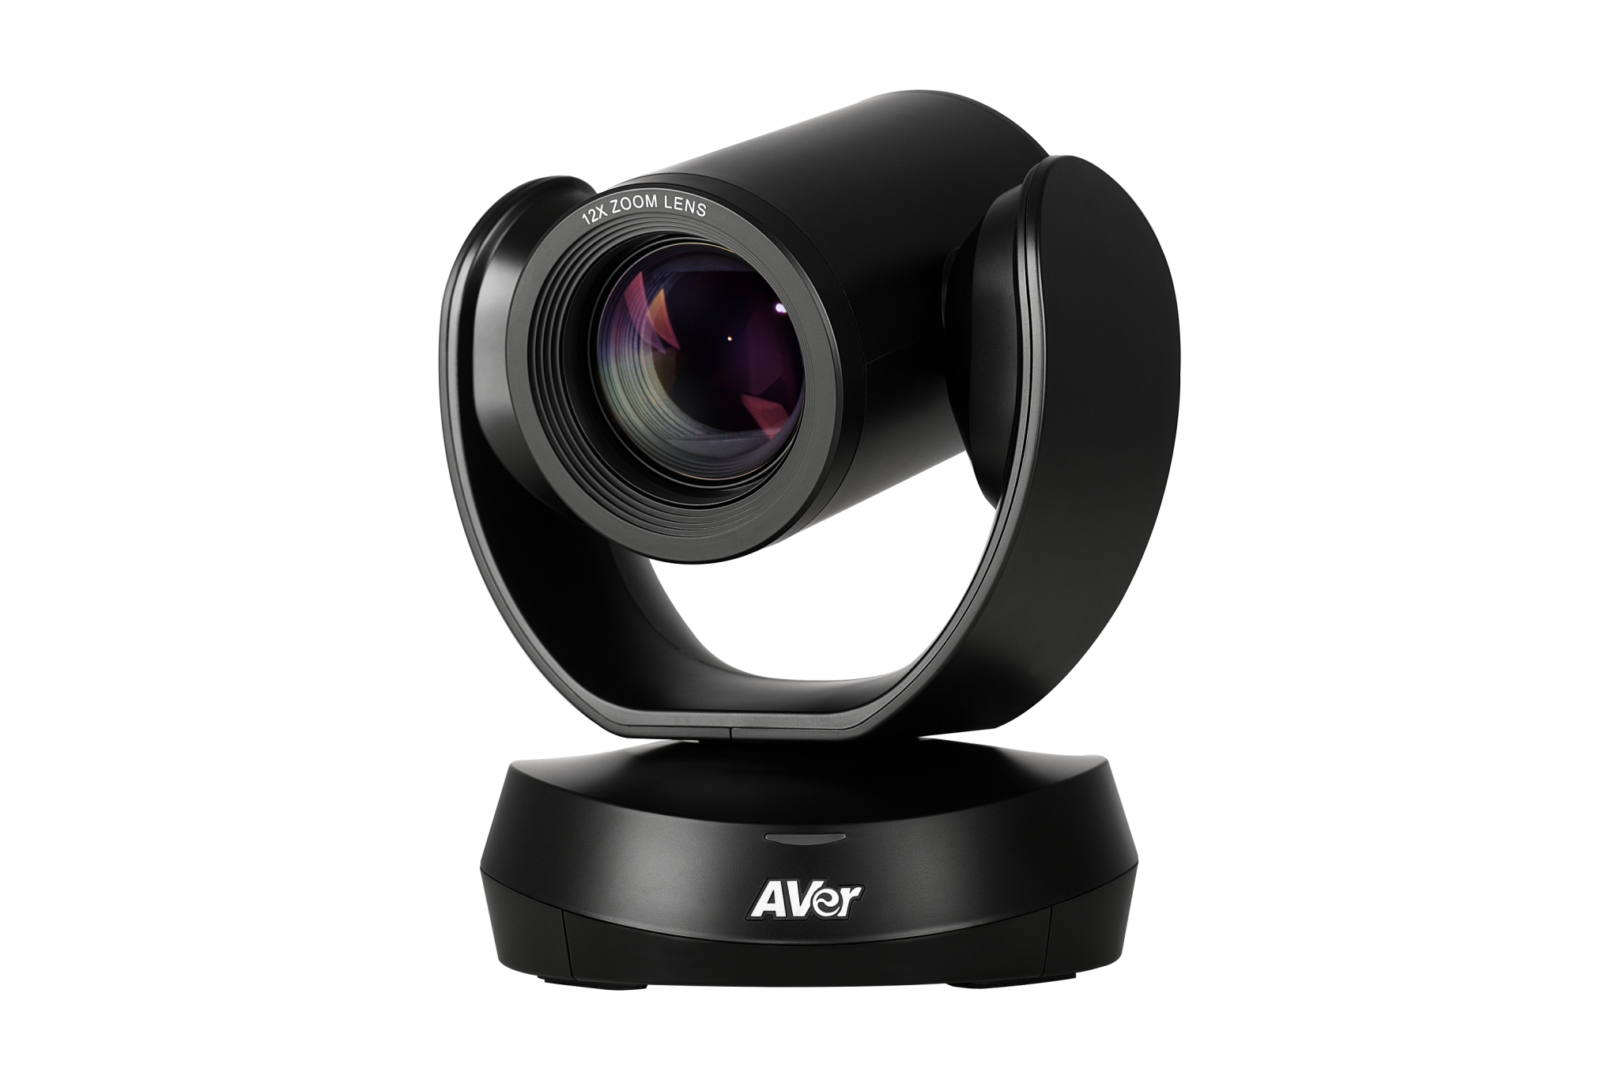 AVer Europe launches new enterprise grade PTZ video conferencing camera